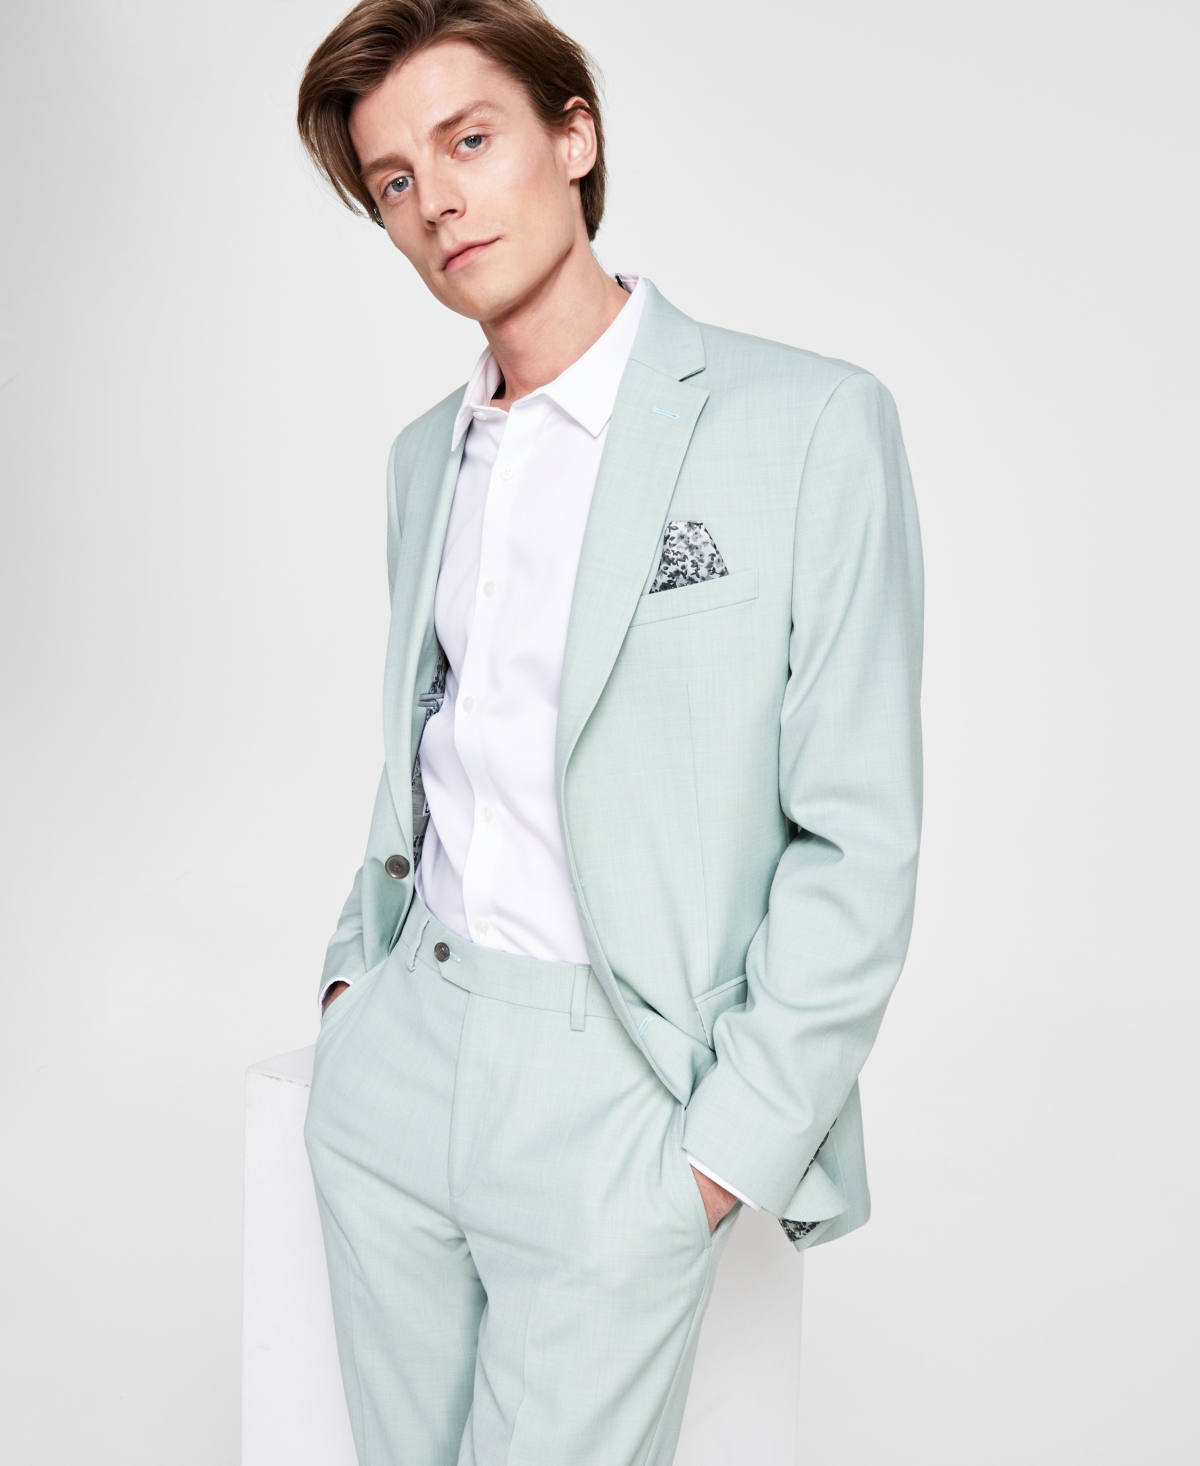 Bar Iii Men's Slim-Fit Wool Sharkskin Suit Jacket, Created for Macy's